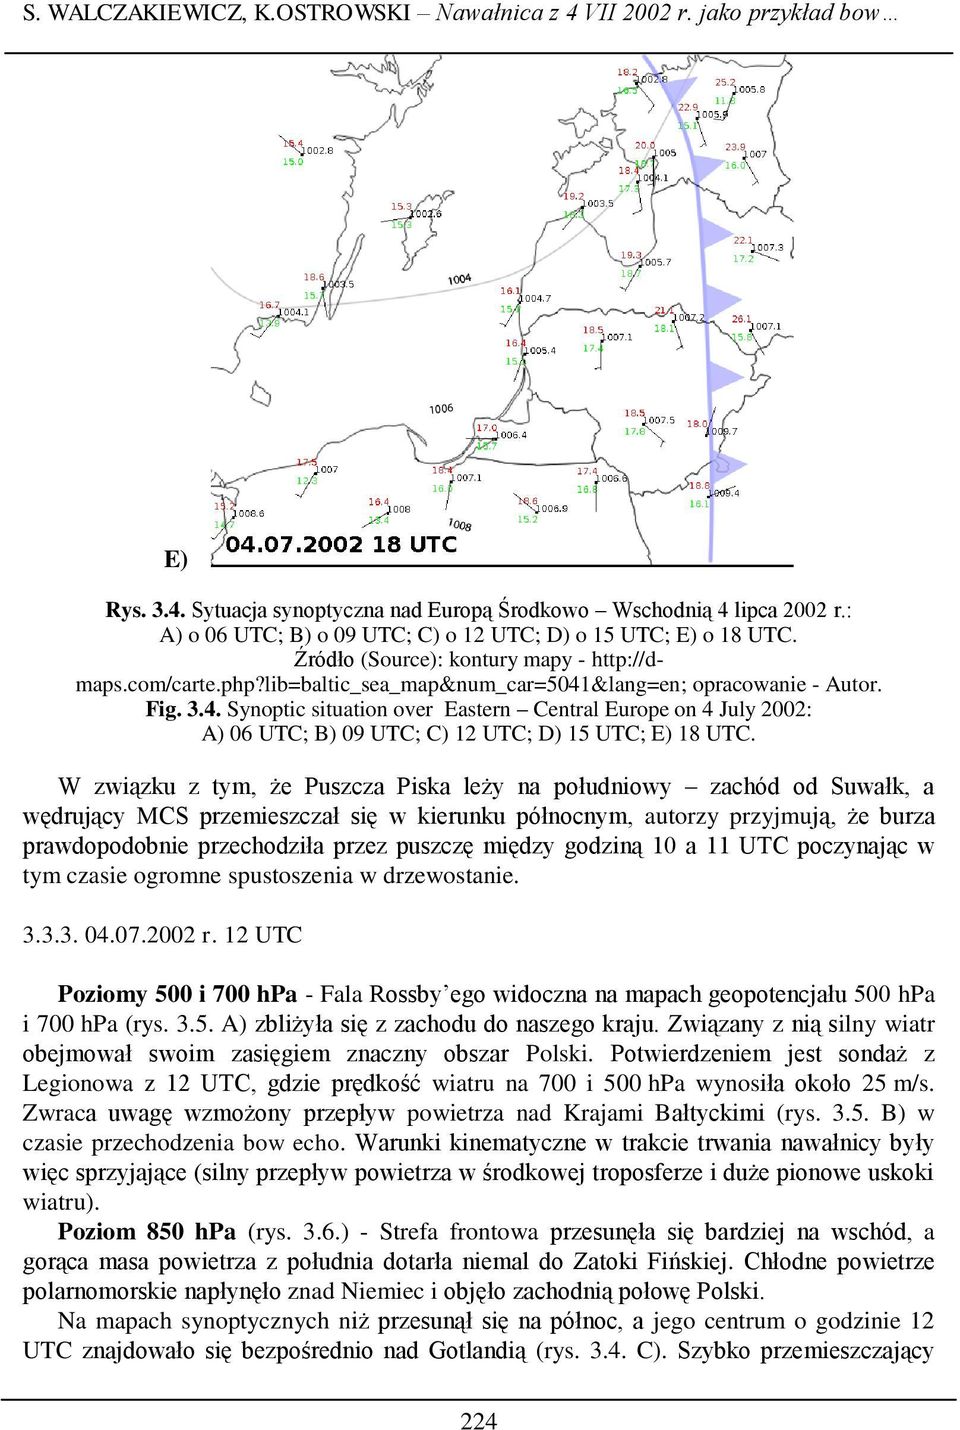 &lang=en; opracowanie - Autor. Fig. 3.4. Synoptic situation over Eastern Central Europe on 4 July 2002: A) 06 UTC; B) 09 UTC; C) 12 UTC; D) 15 UTC; E) 18 UTC.